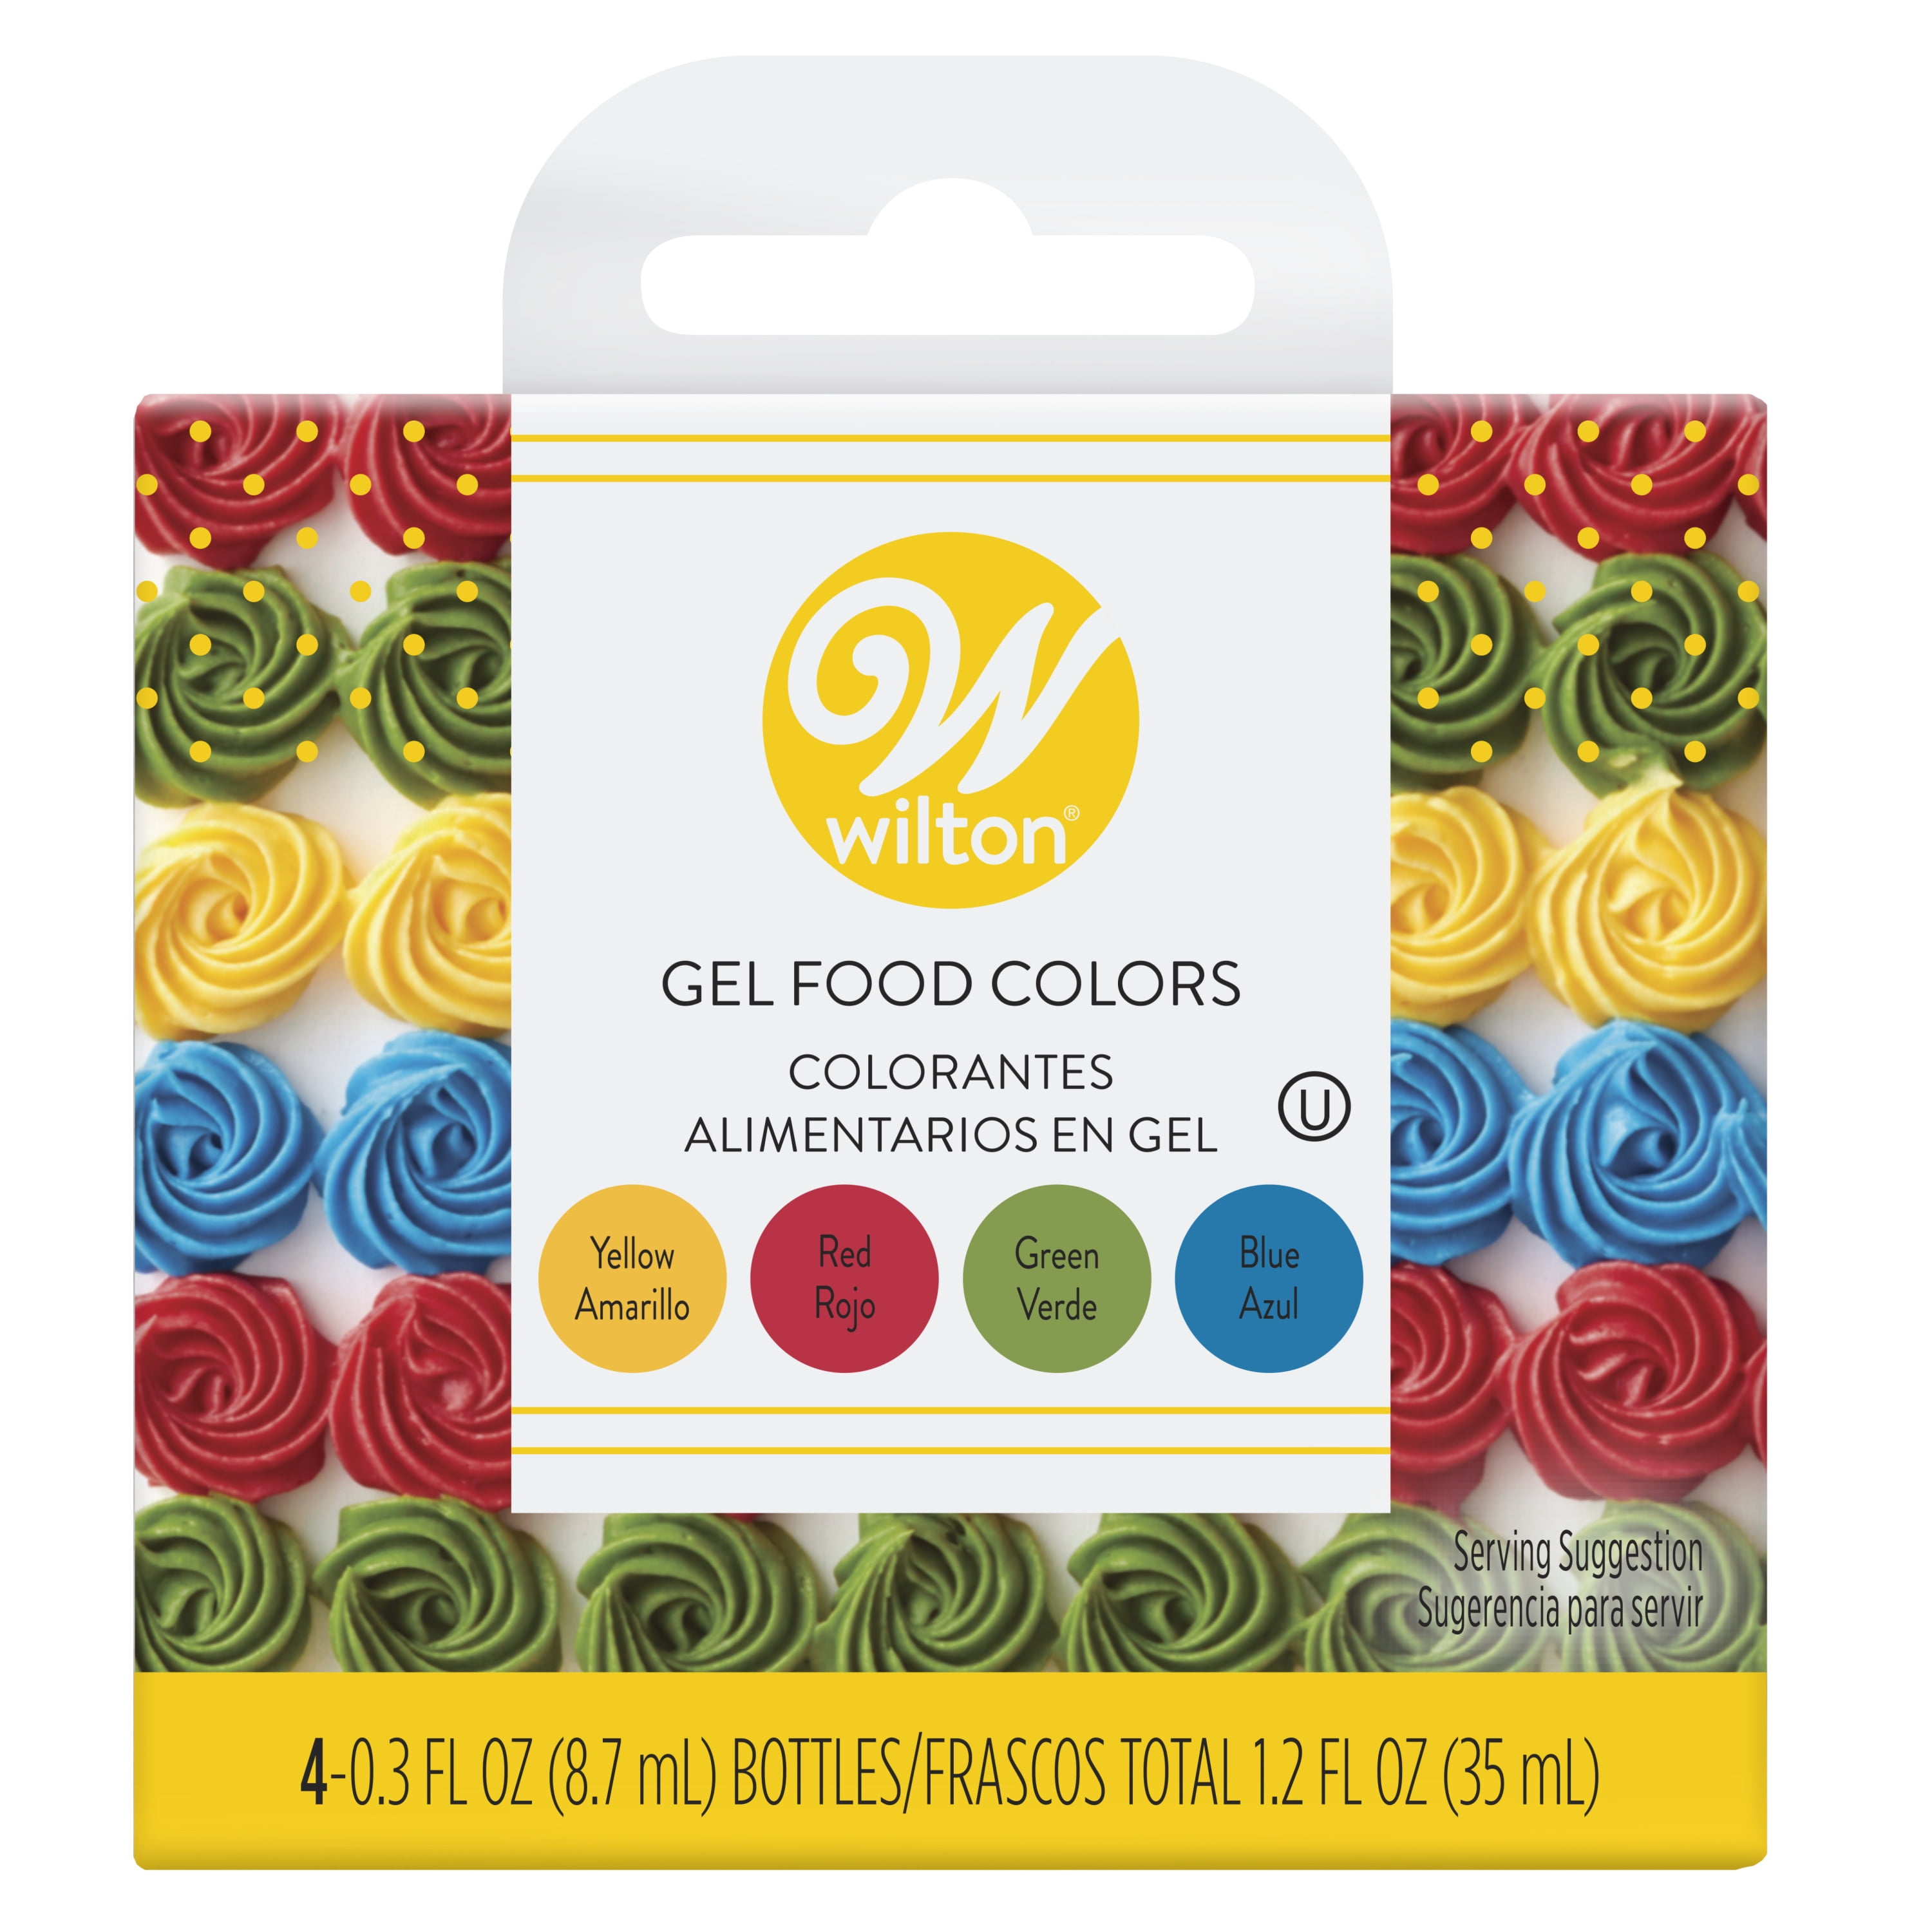 Kit de 8 colorantes alimentarios Color Right